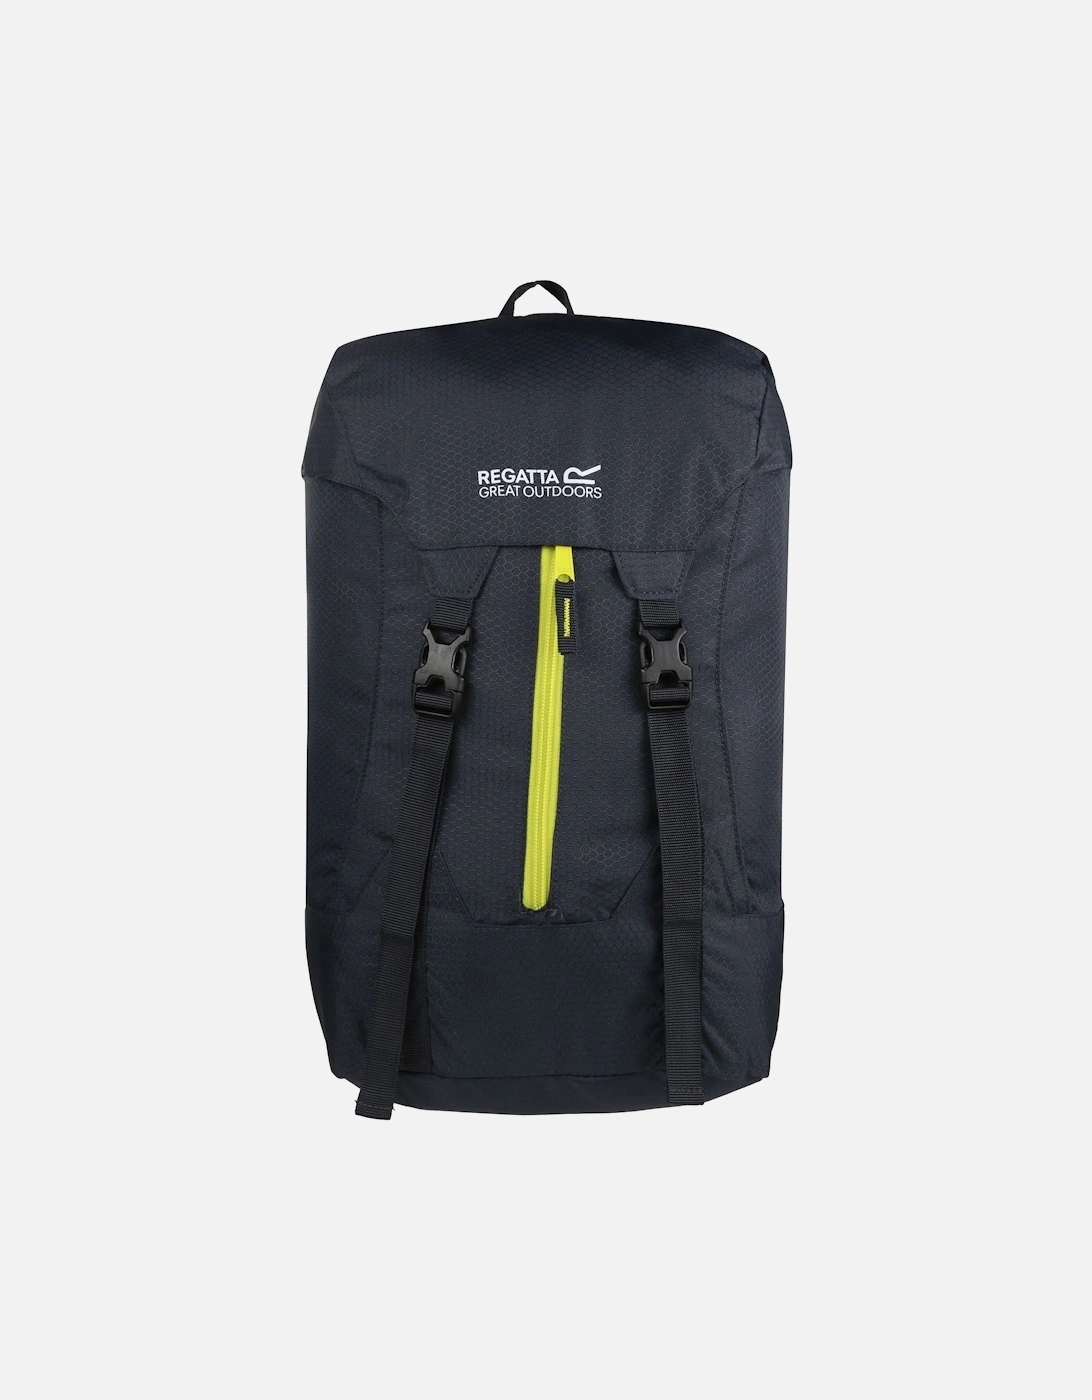 Unisex Adults Easypack II 25L Lightweight Packaway Backpack